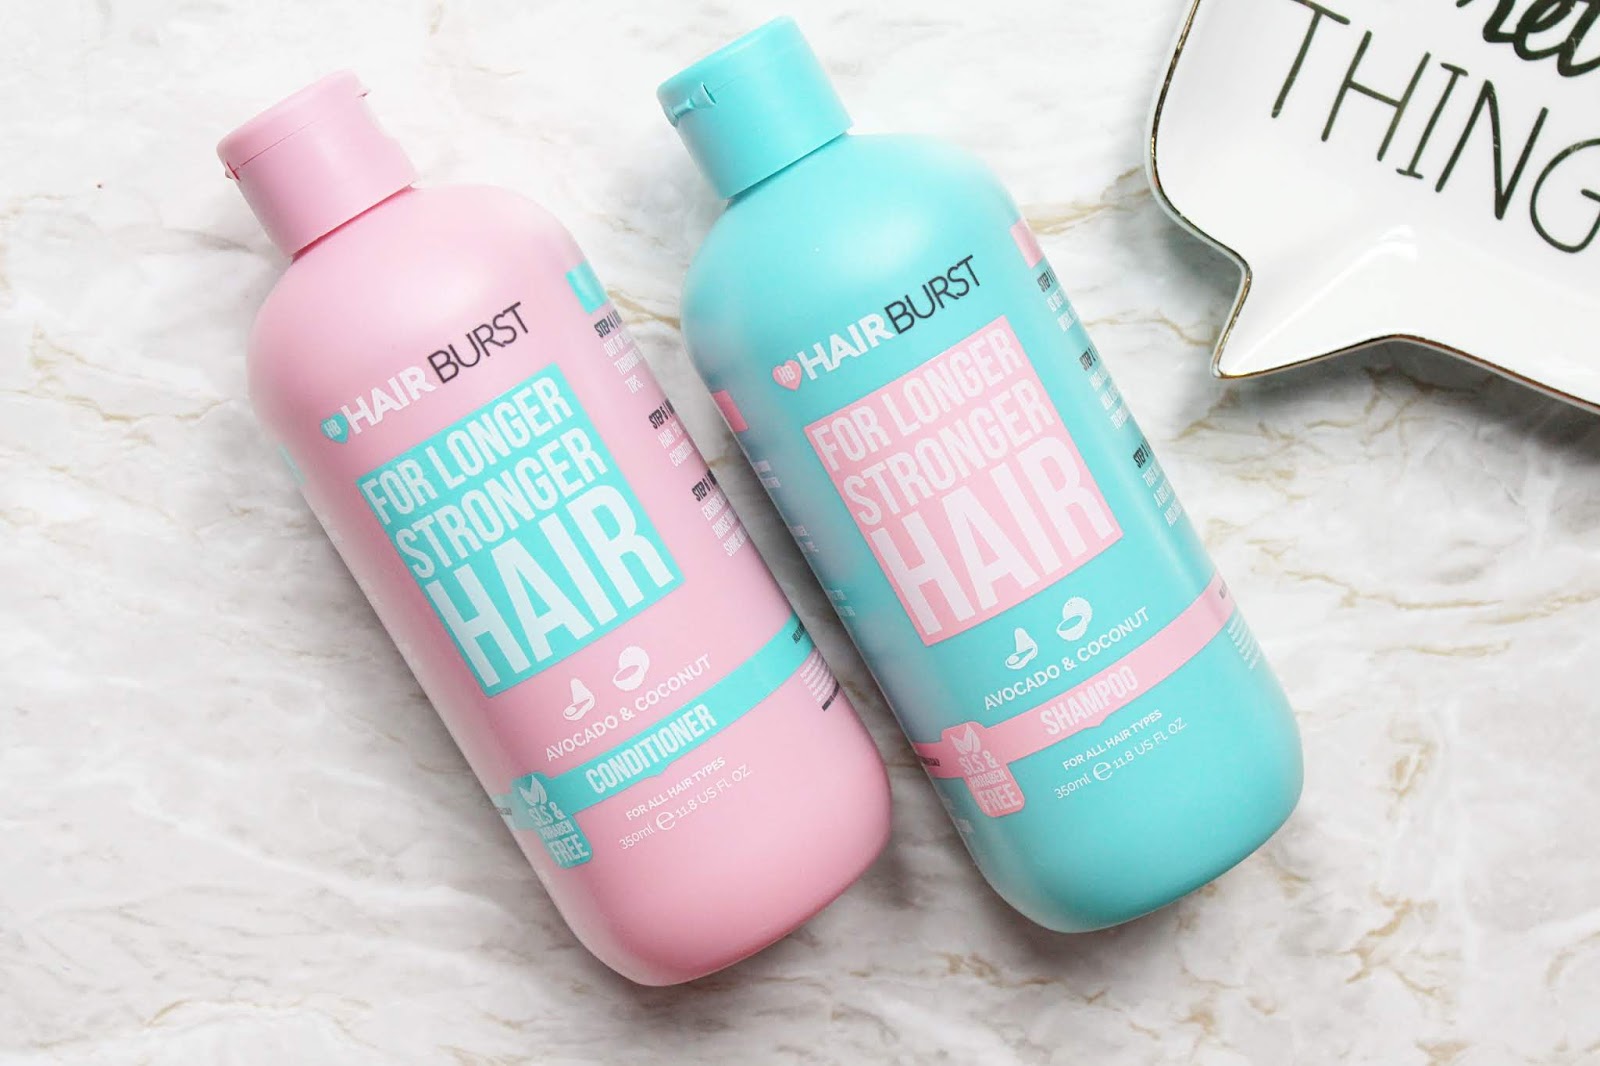 Hairburst Shampoo & Conditioner Review 